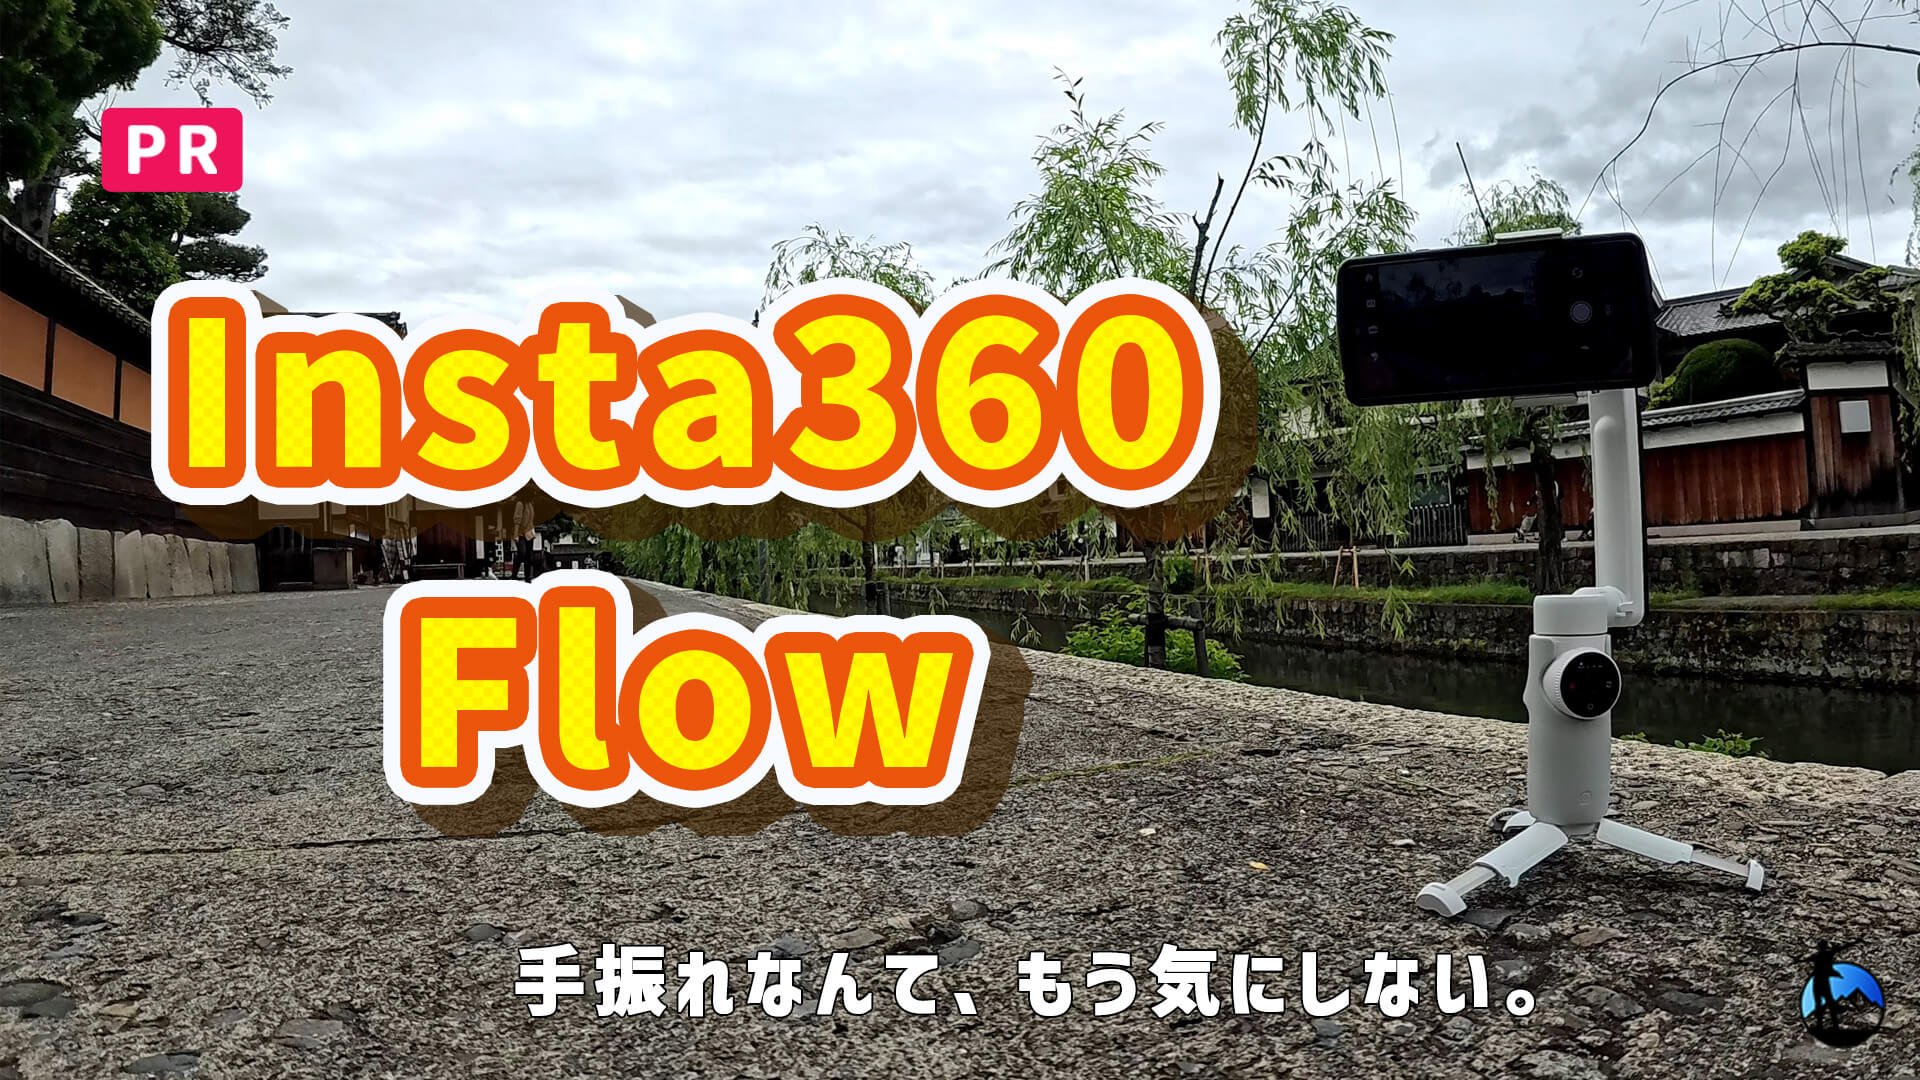 Insta360 Flowのアイキャッチ